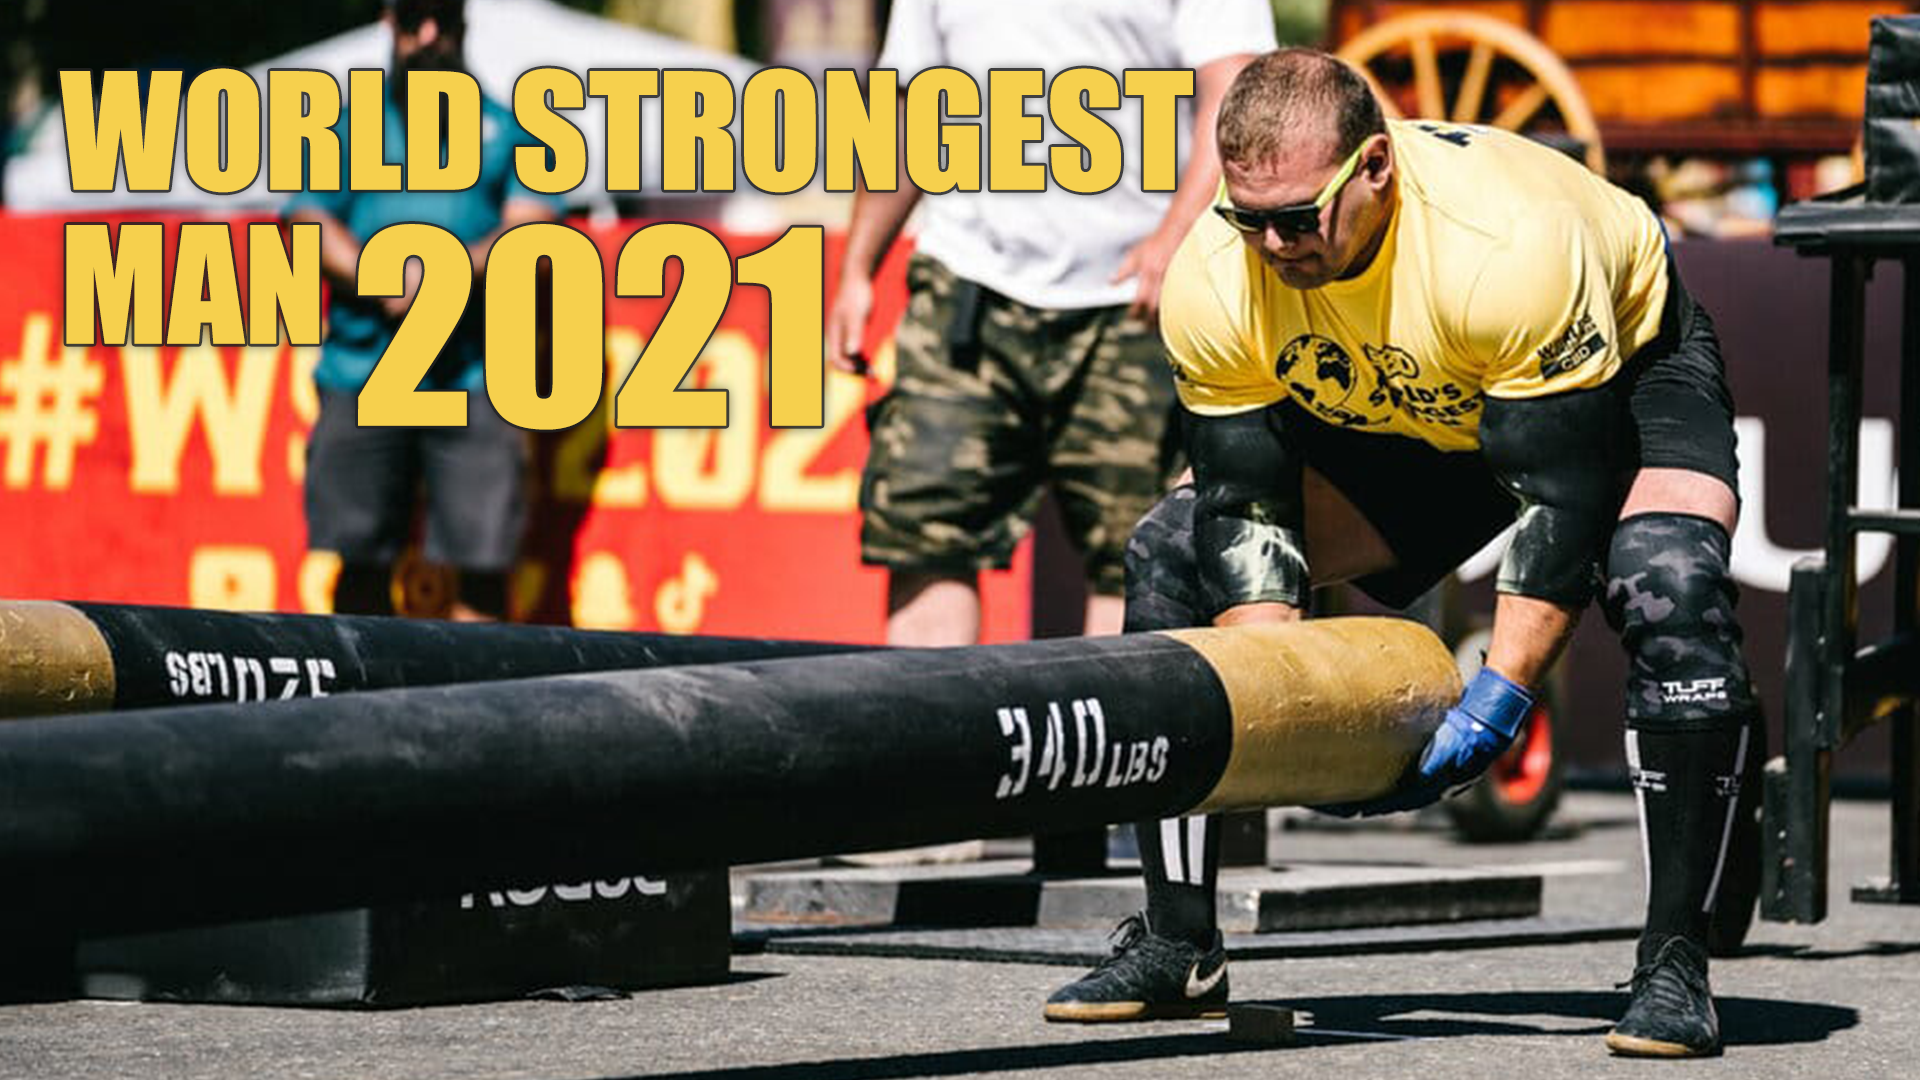 World Strongest Man 2021